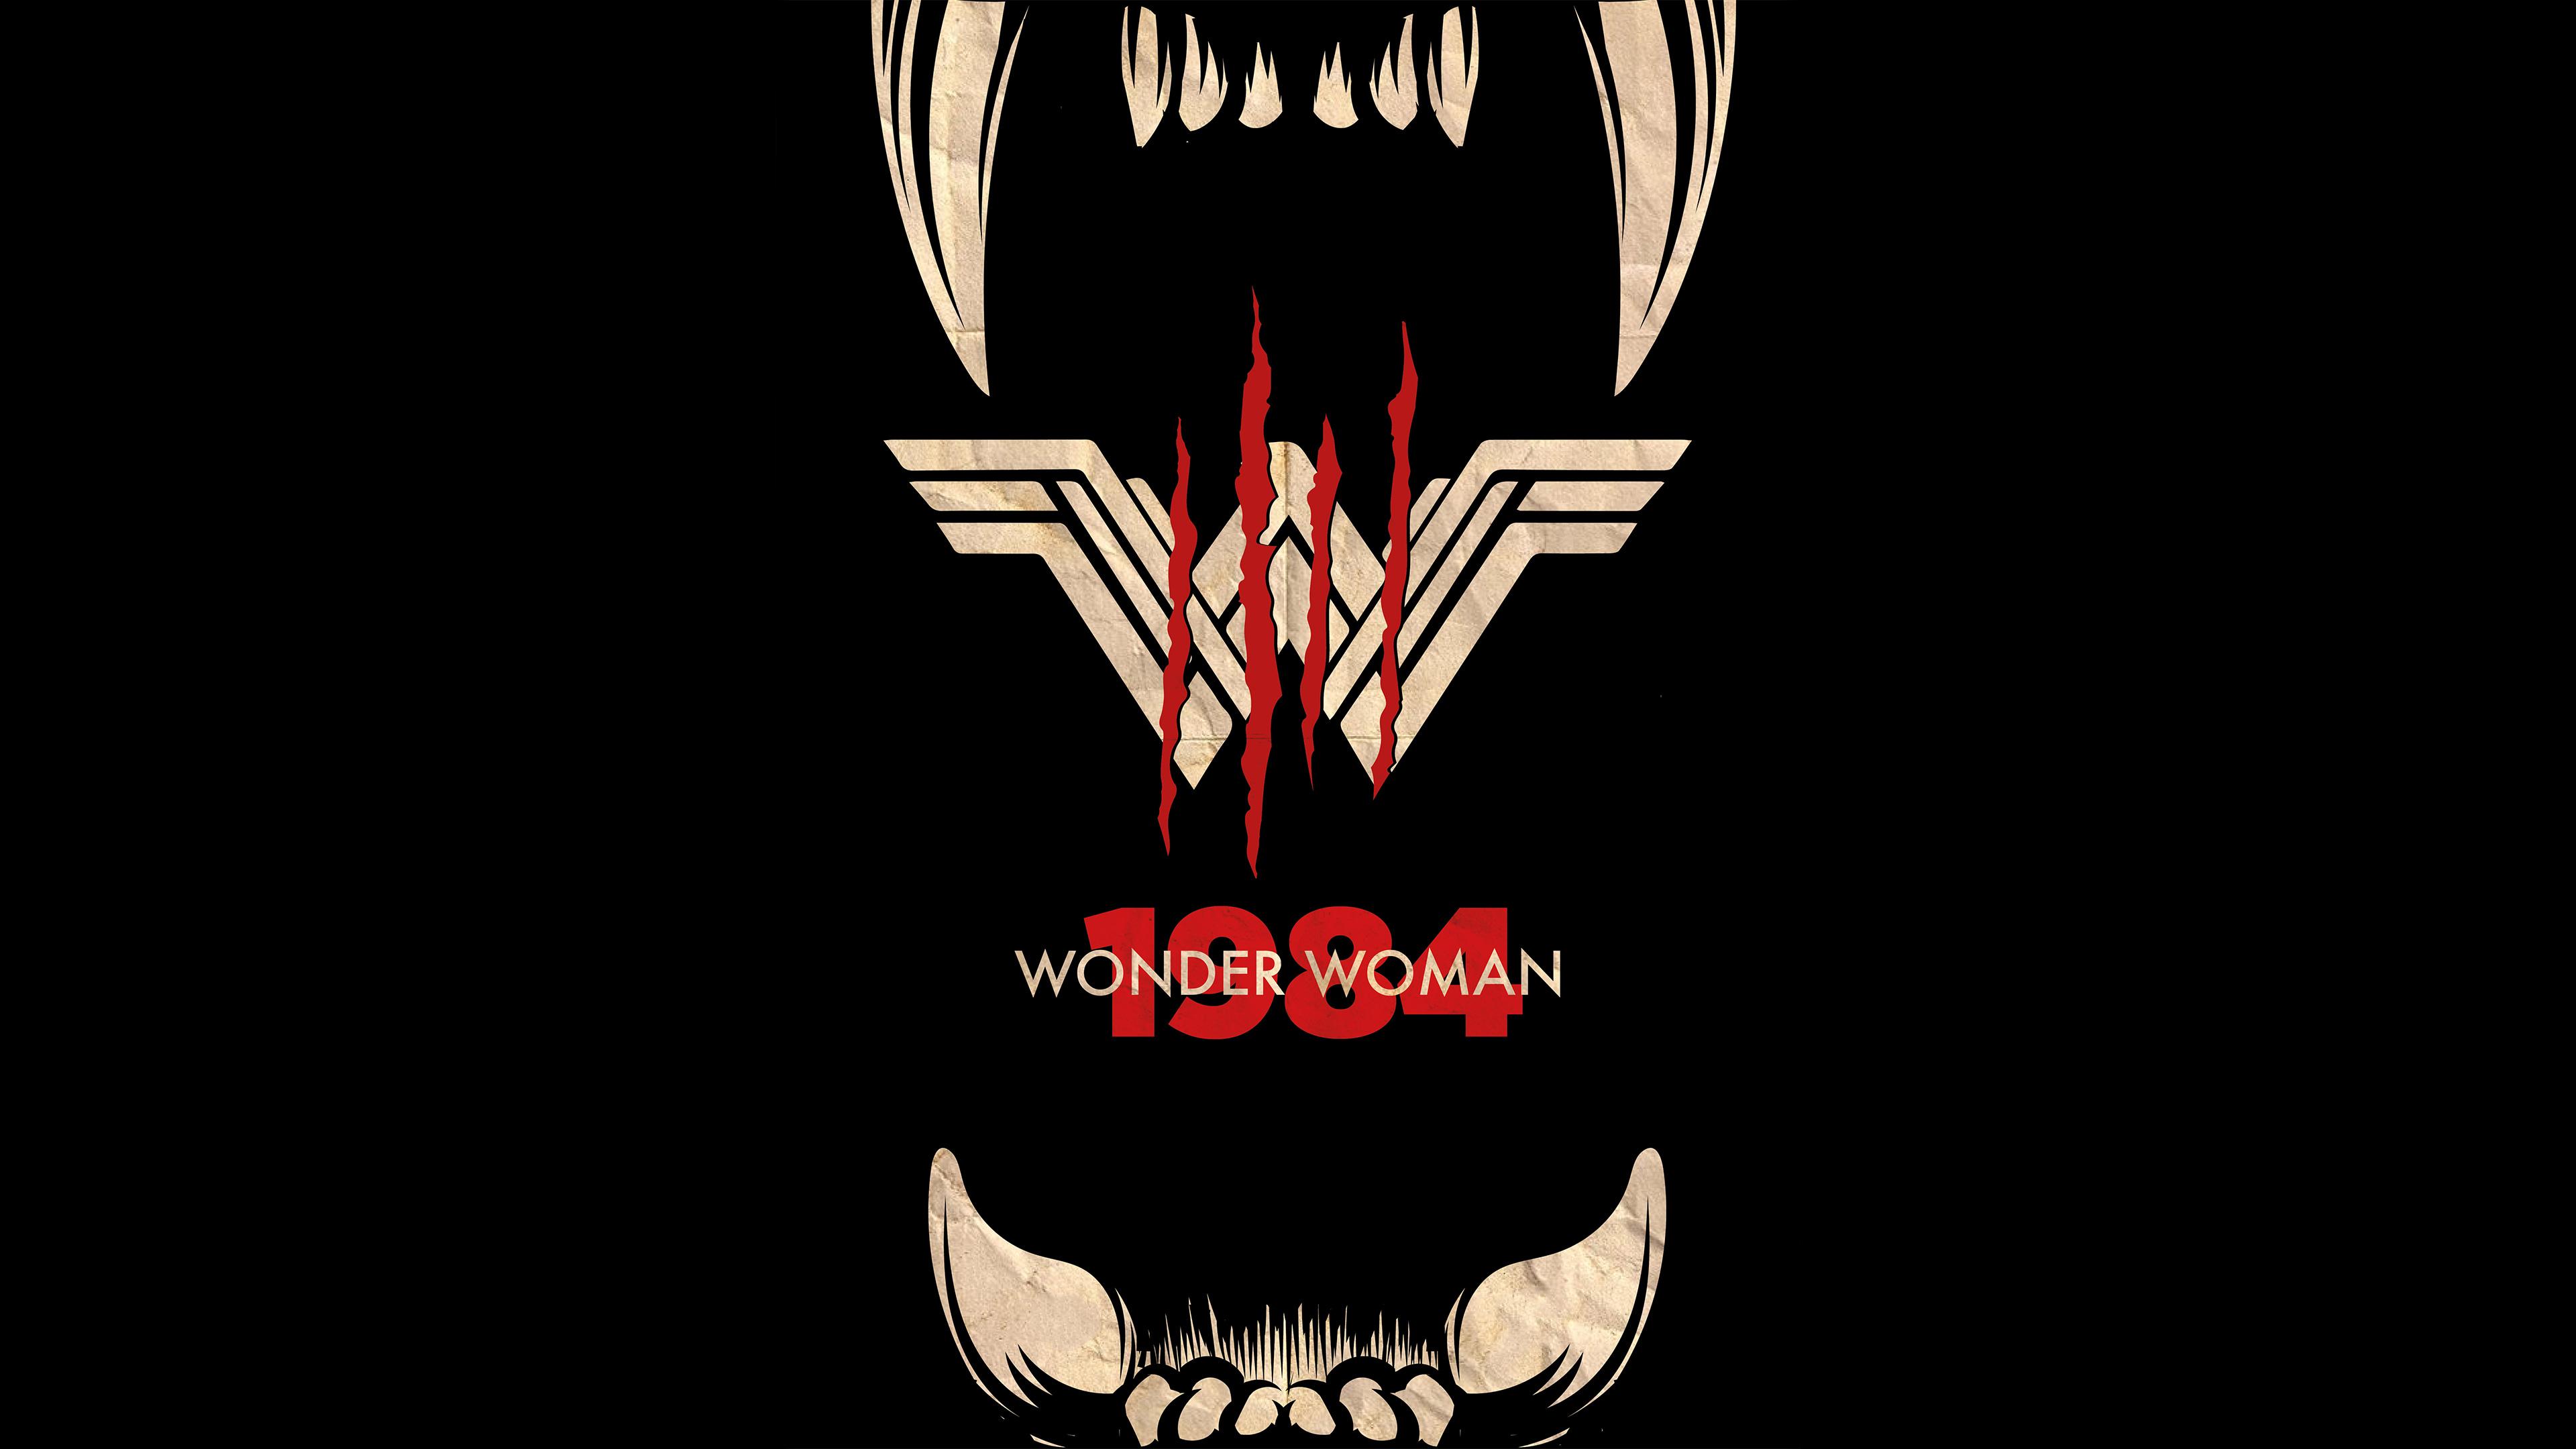 Wallpaper 4k Wonder Woman 1984 Movie Poster 2019 movies wallpaper